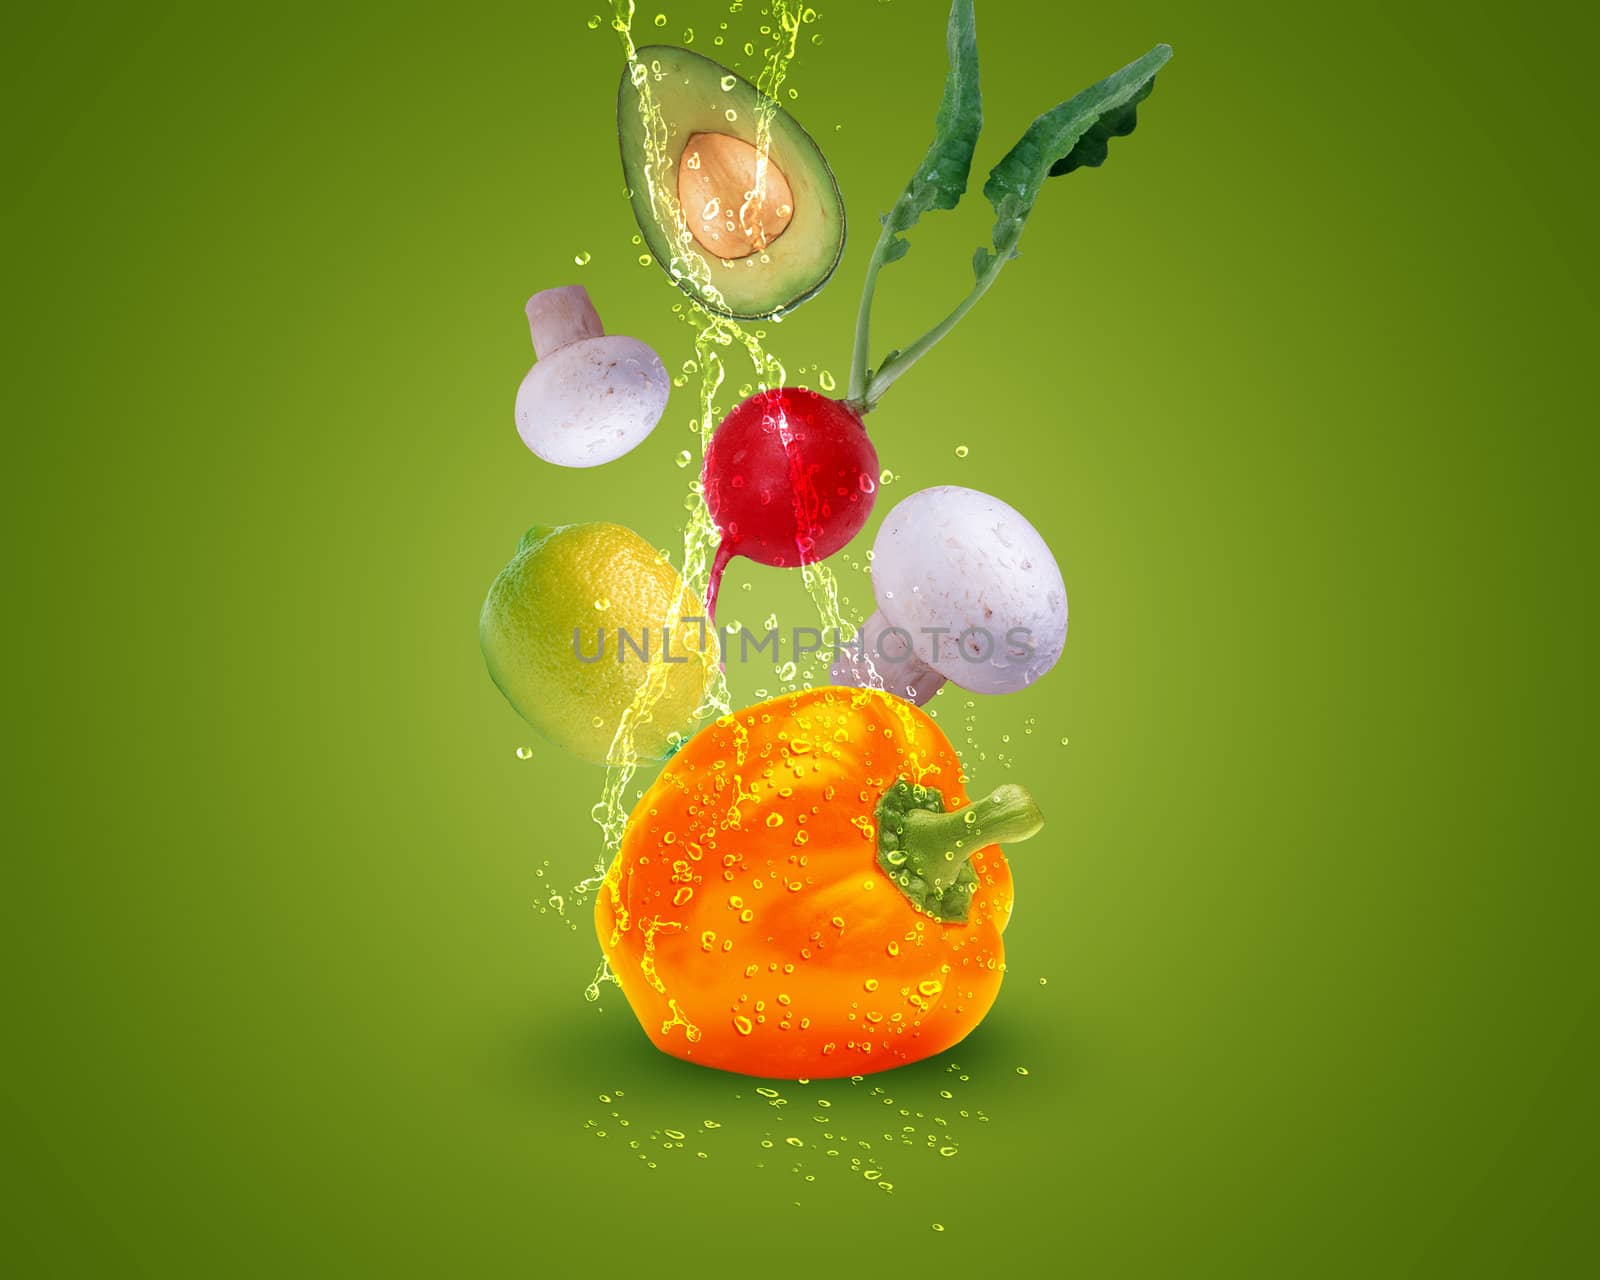 Fresh vegetables by designsstock